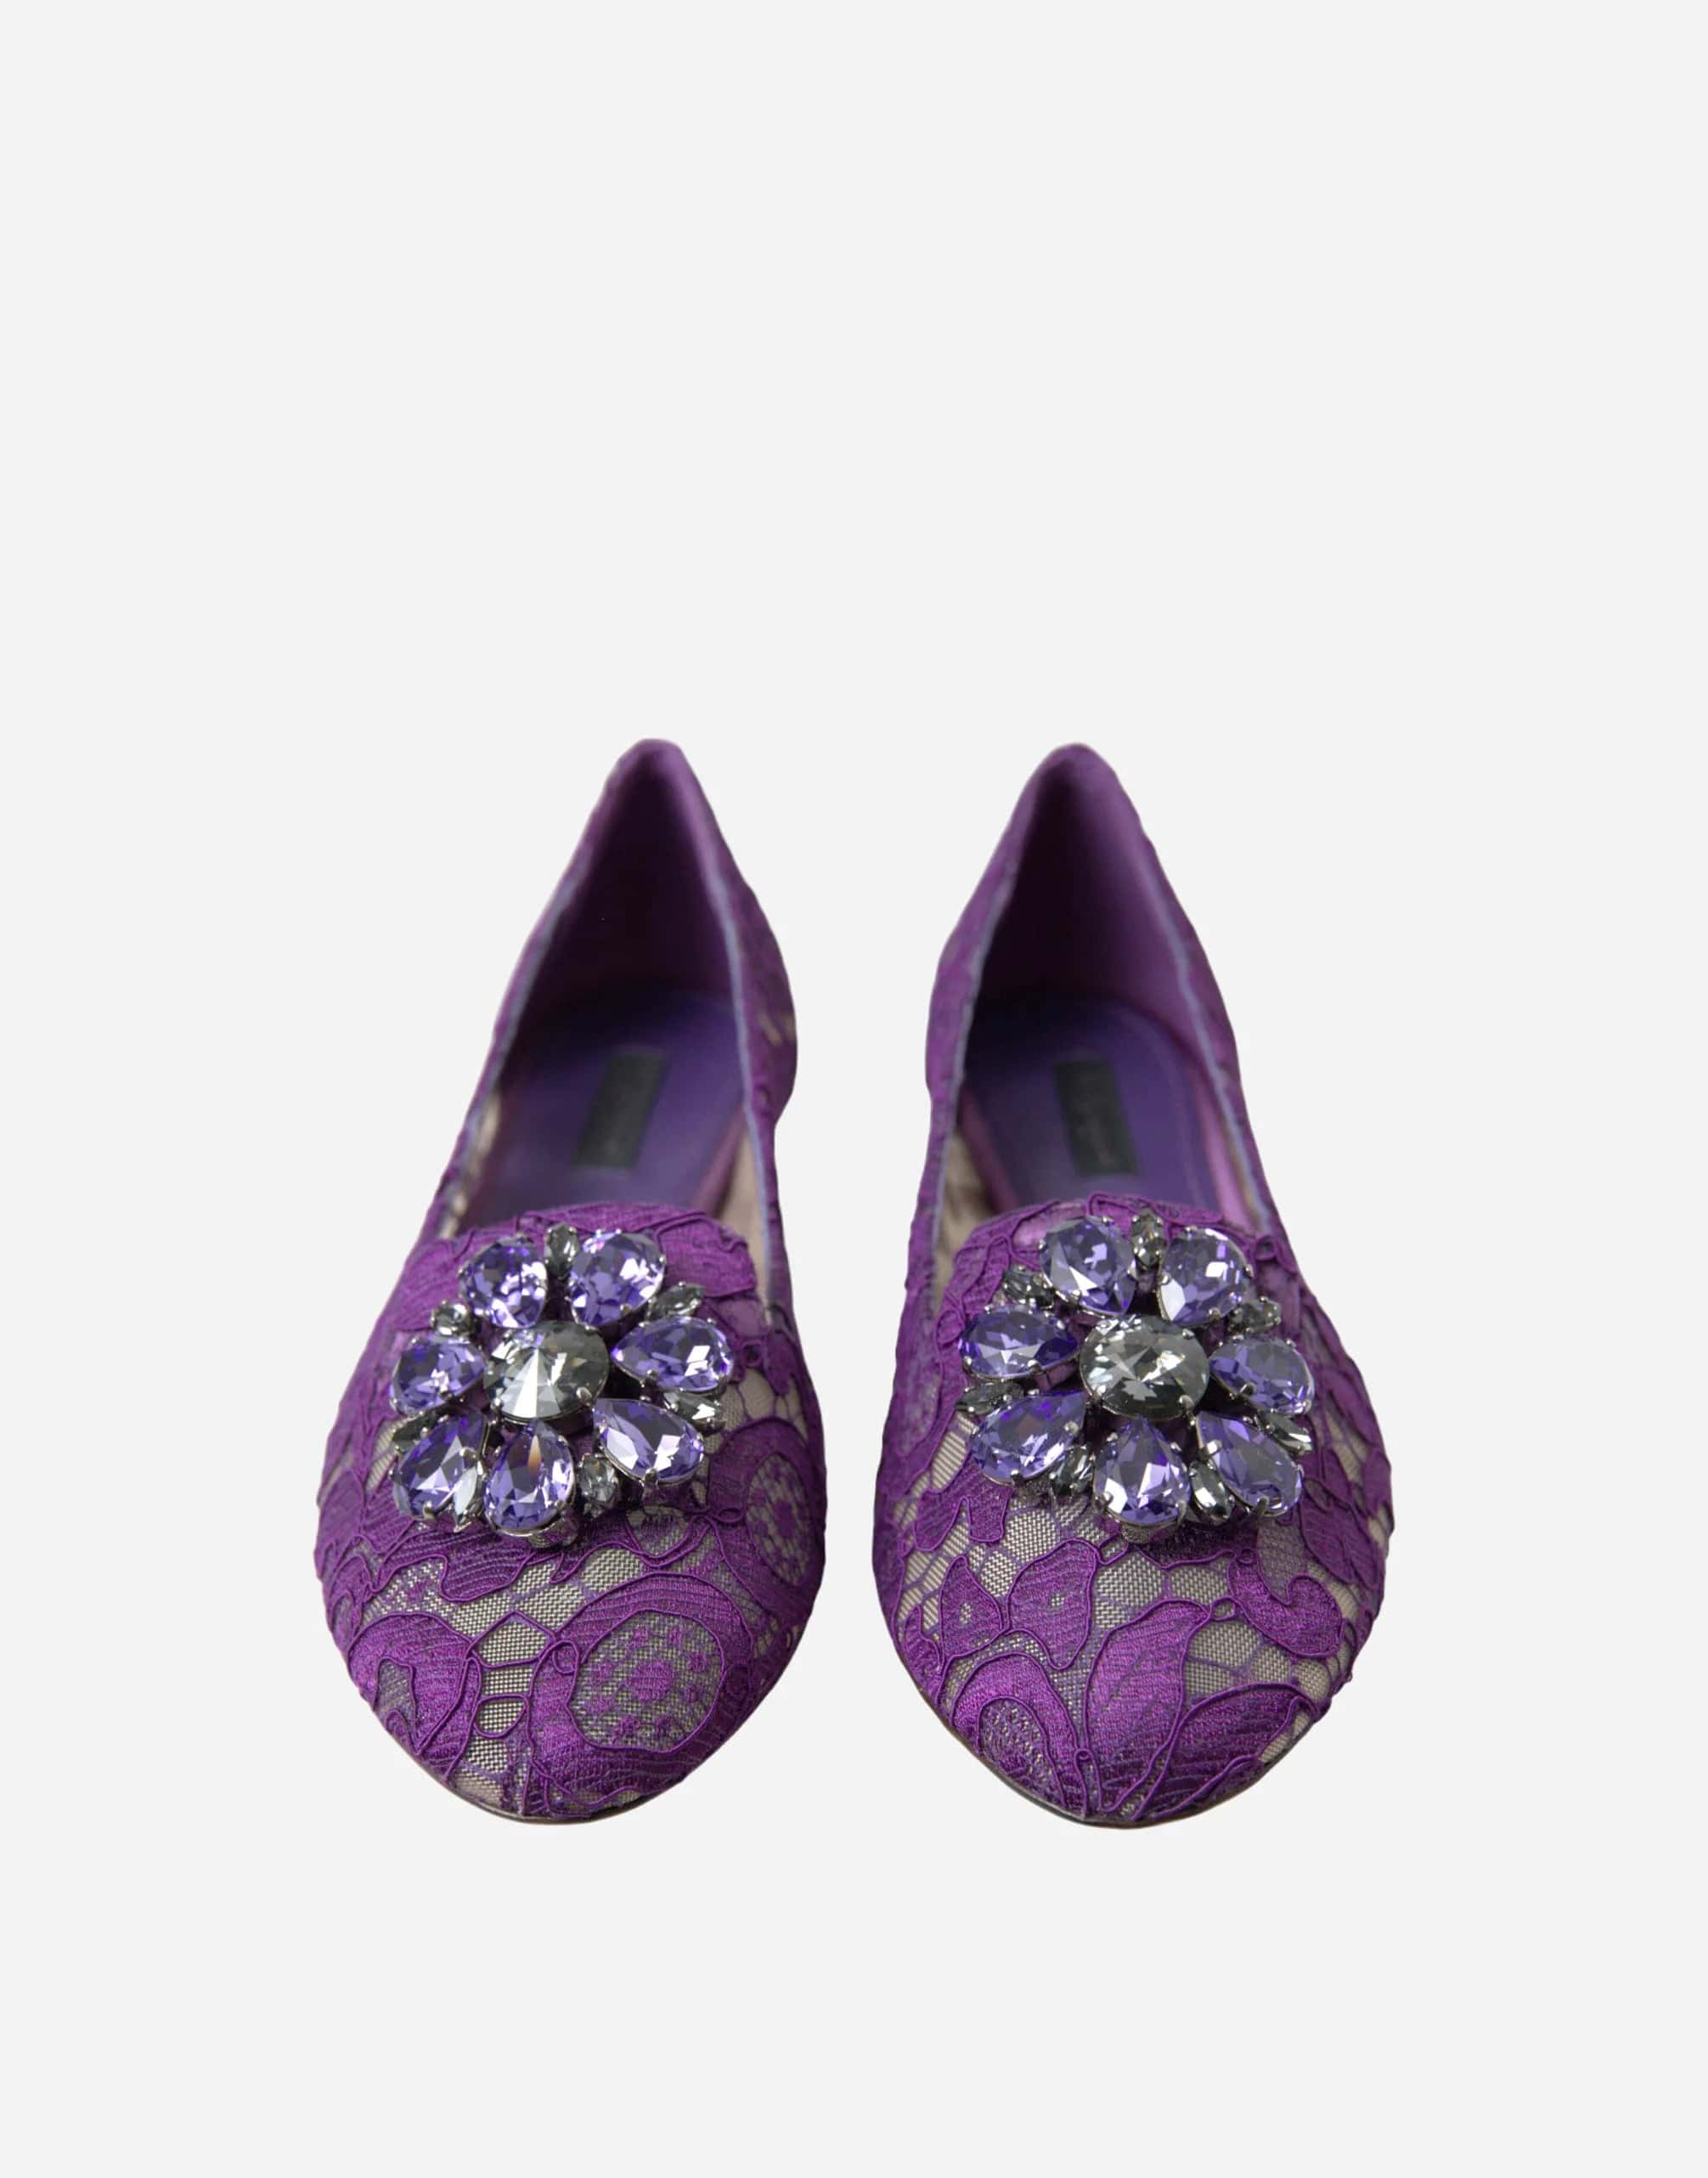 Dolce & Gabbana Vally Taormina Lace Crystal Flats